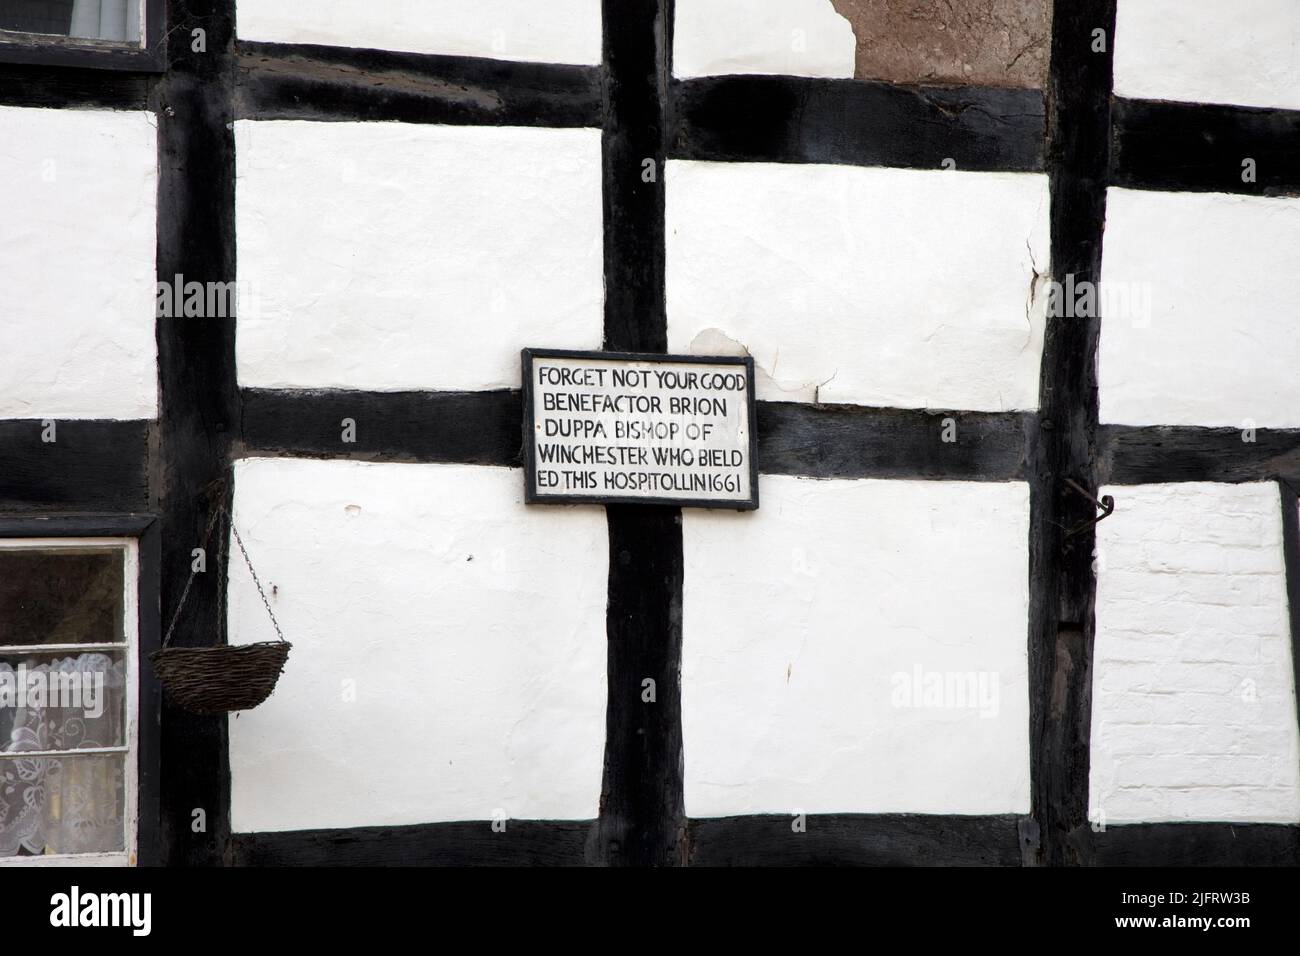 Memorial plaque to Bishop Duppa who endowed this former hospital in 1661 Pembridge Arrow Valley mediaeval village Herefordhire UK Stock Photo